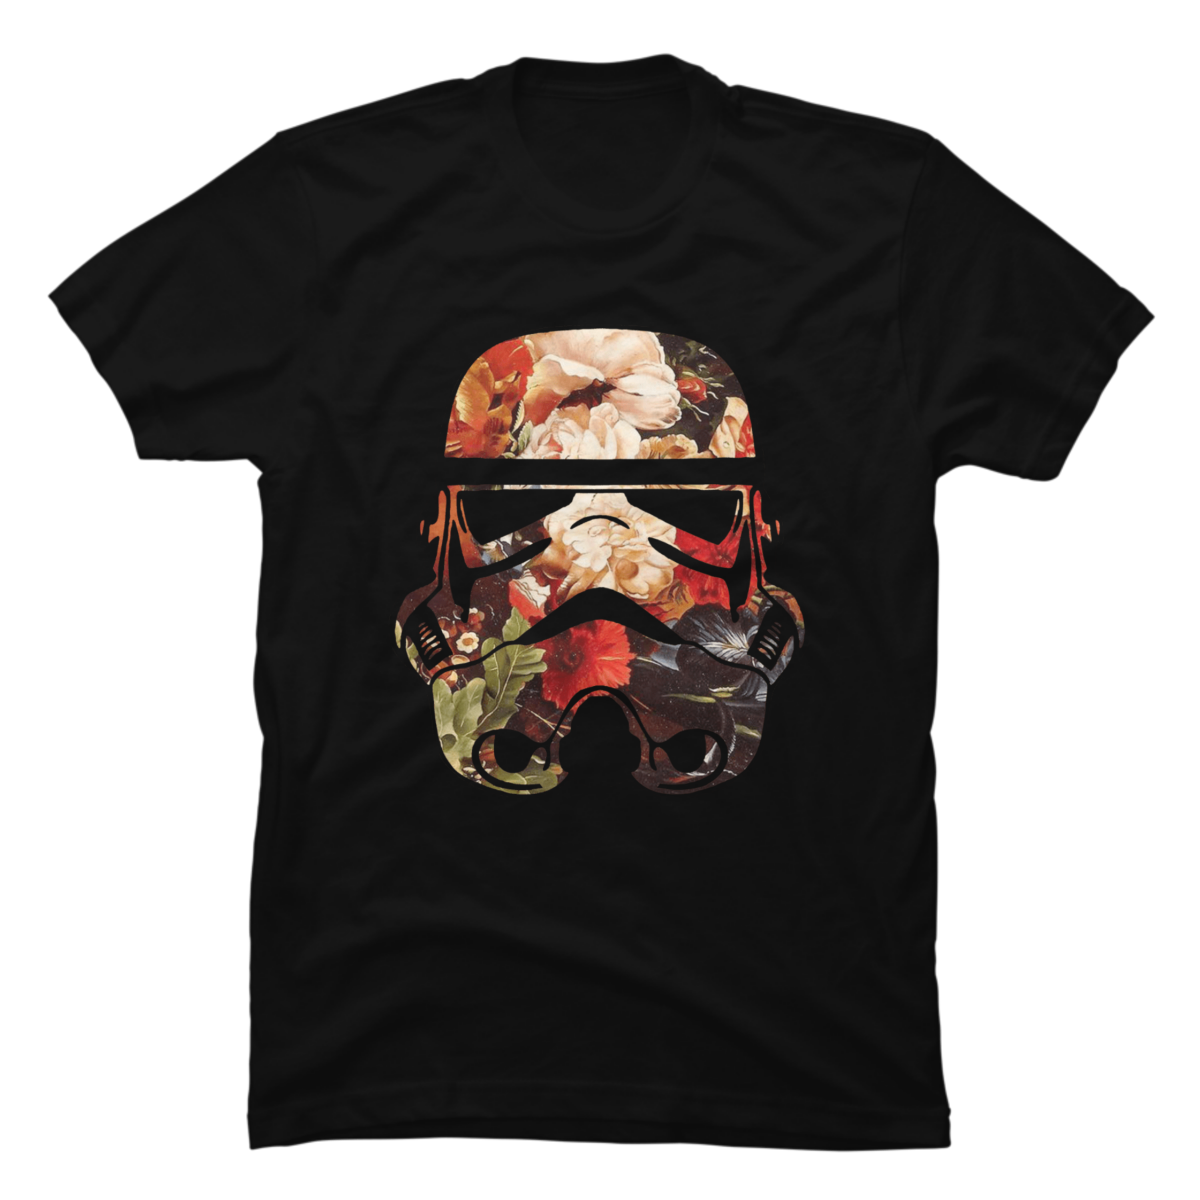 floral stormtrooper shirt